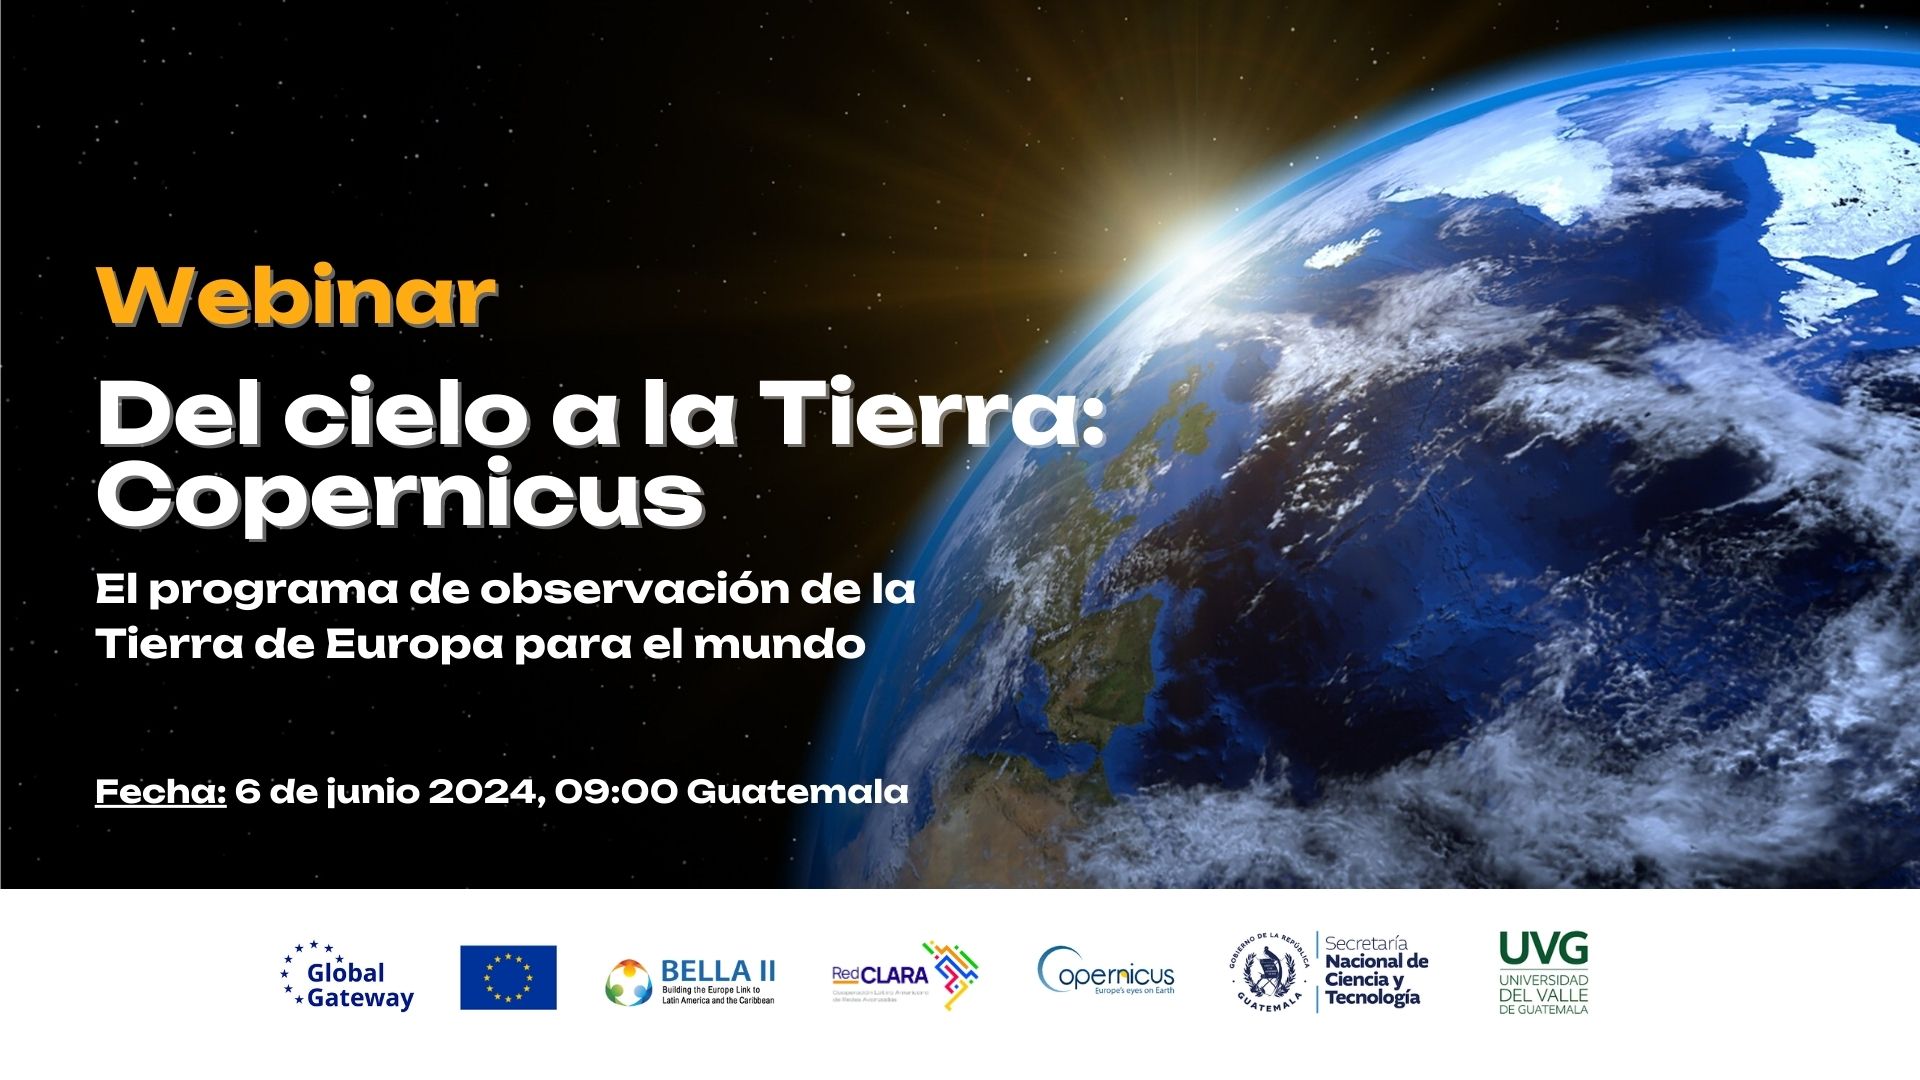 Copernicus Academy expands into Guatemala